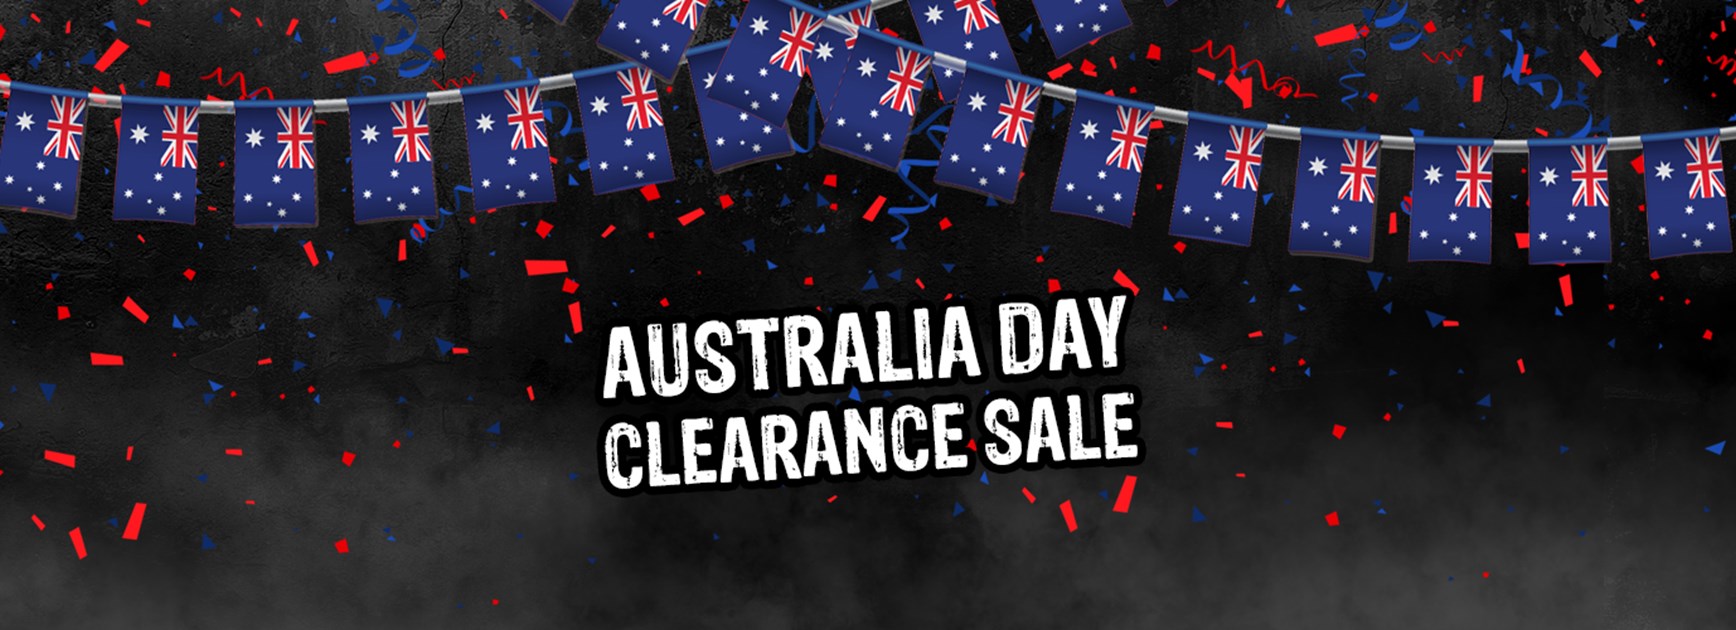 Australia Day Clearance Sale